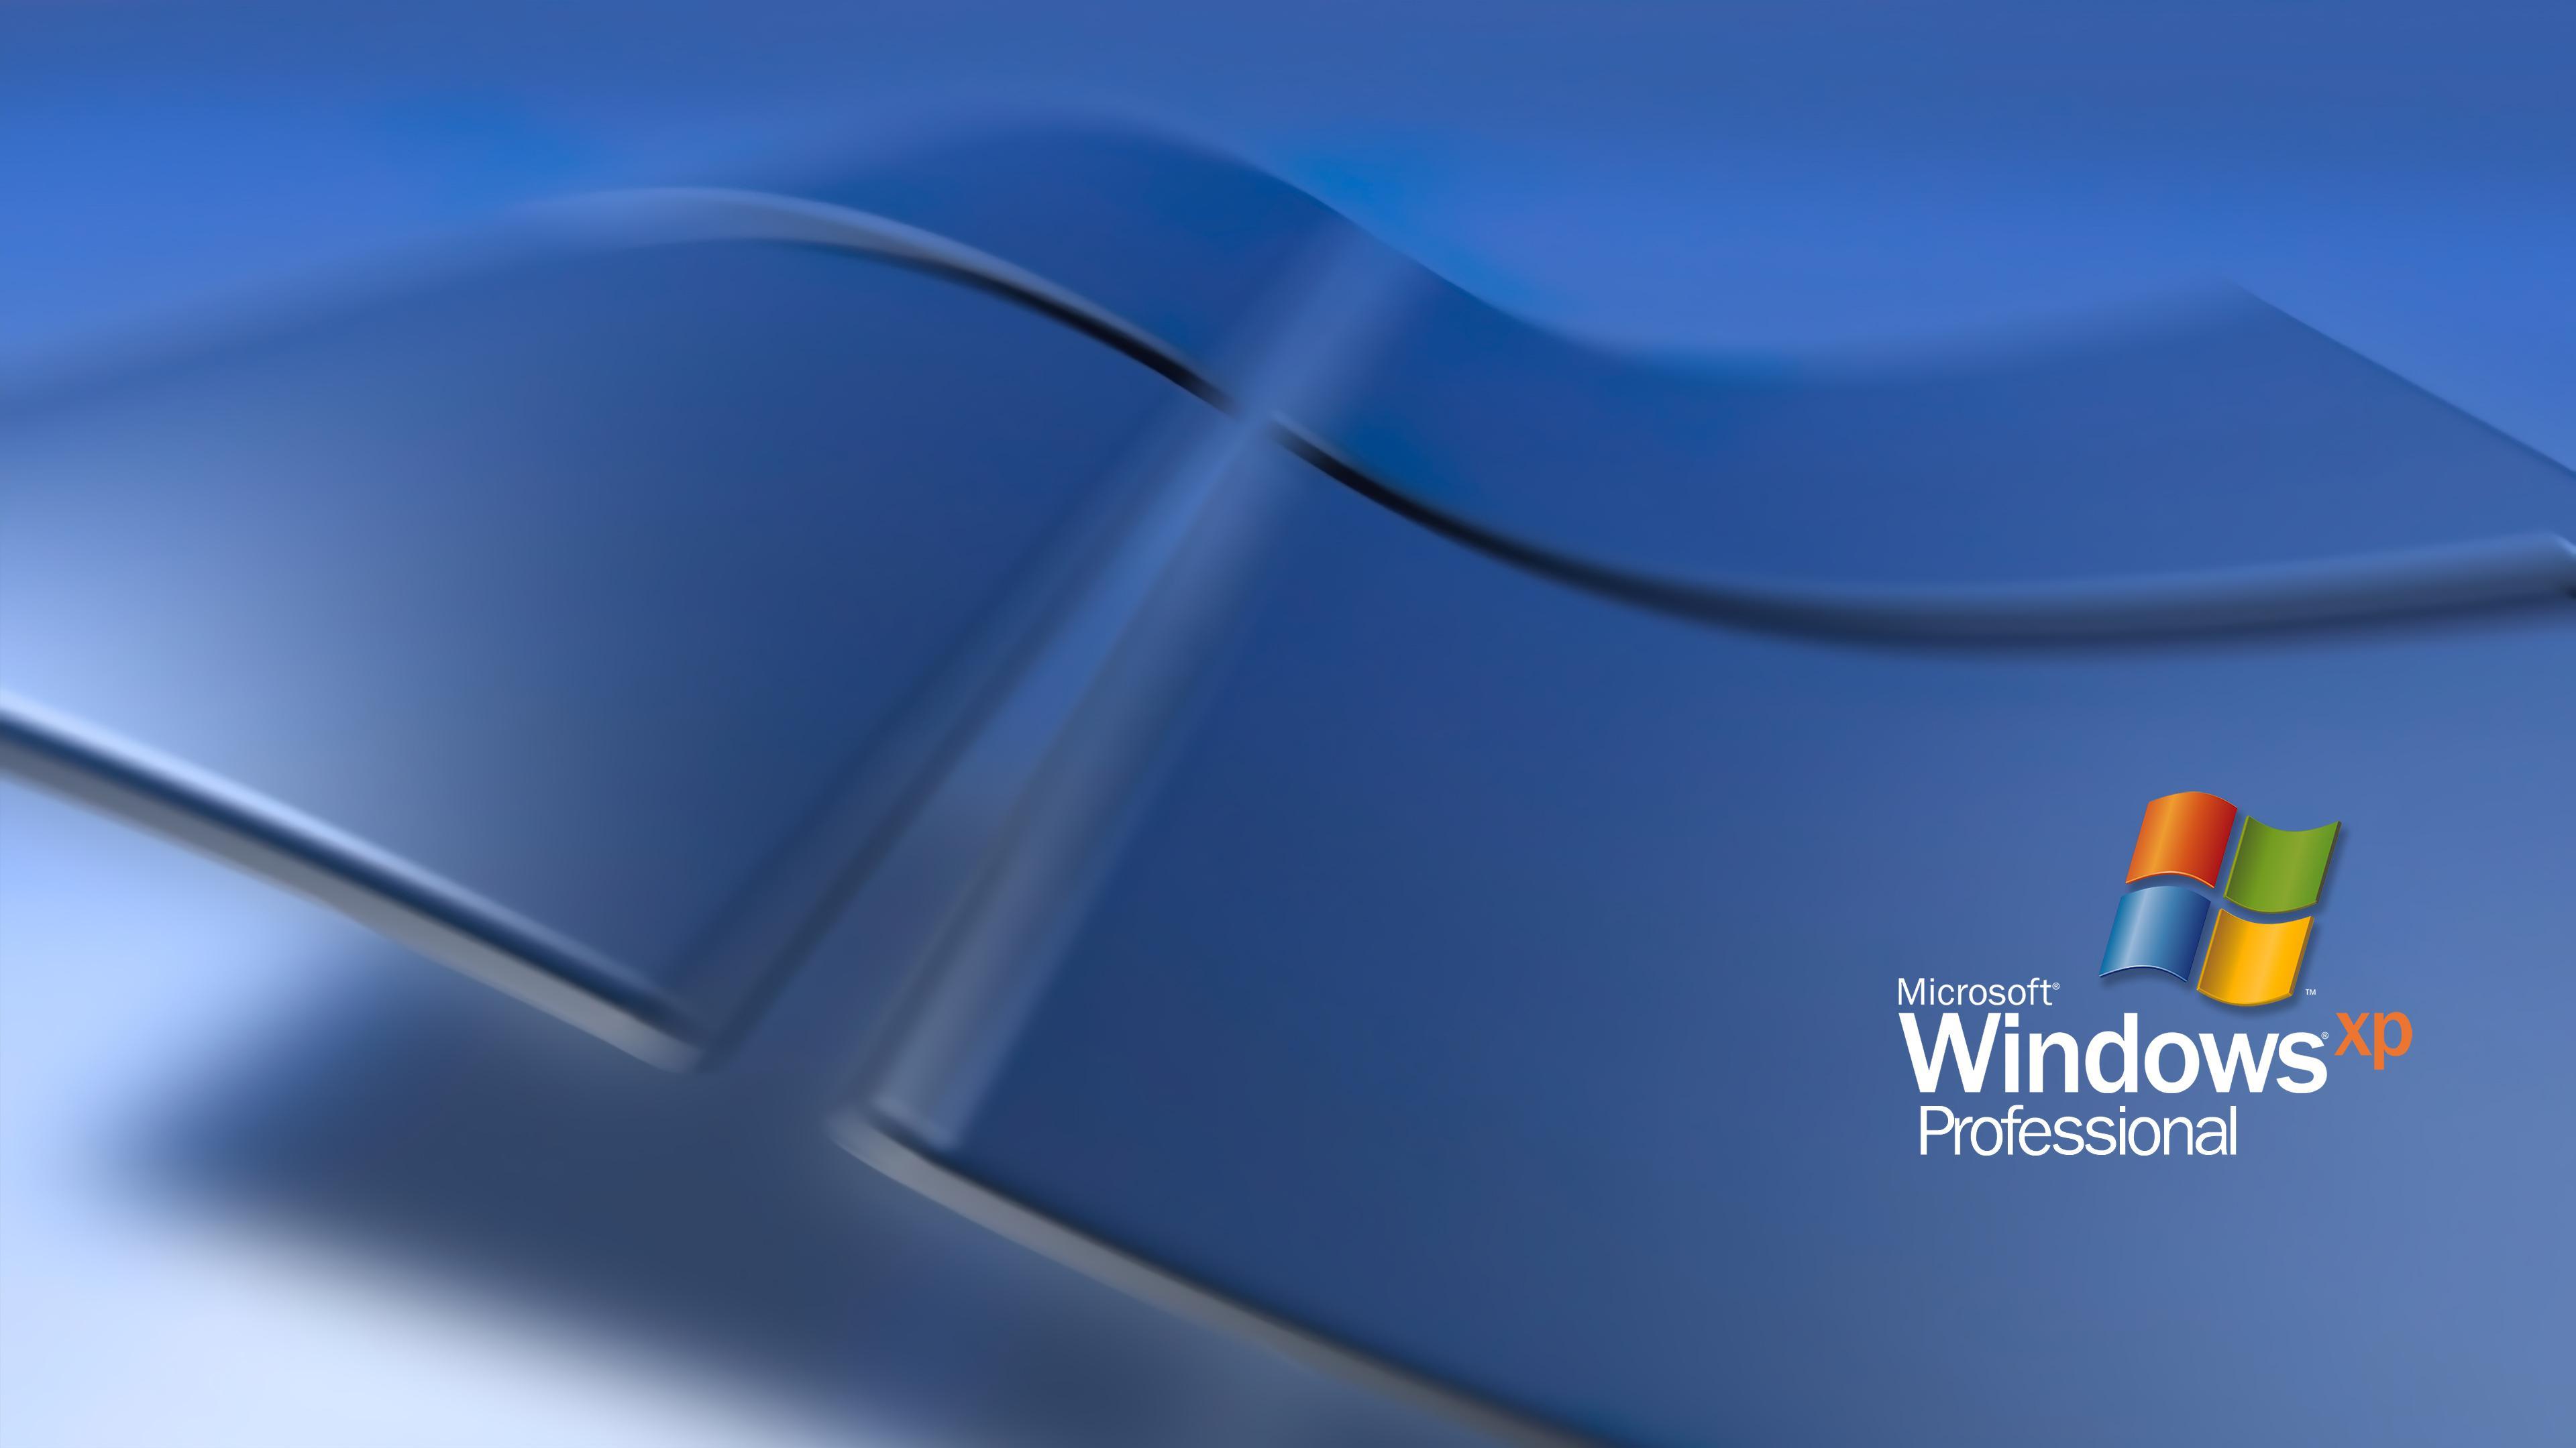 Windows Xp Professional Background Widescreen 4k R Windowsxp